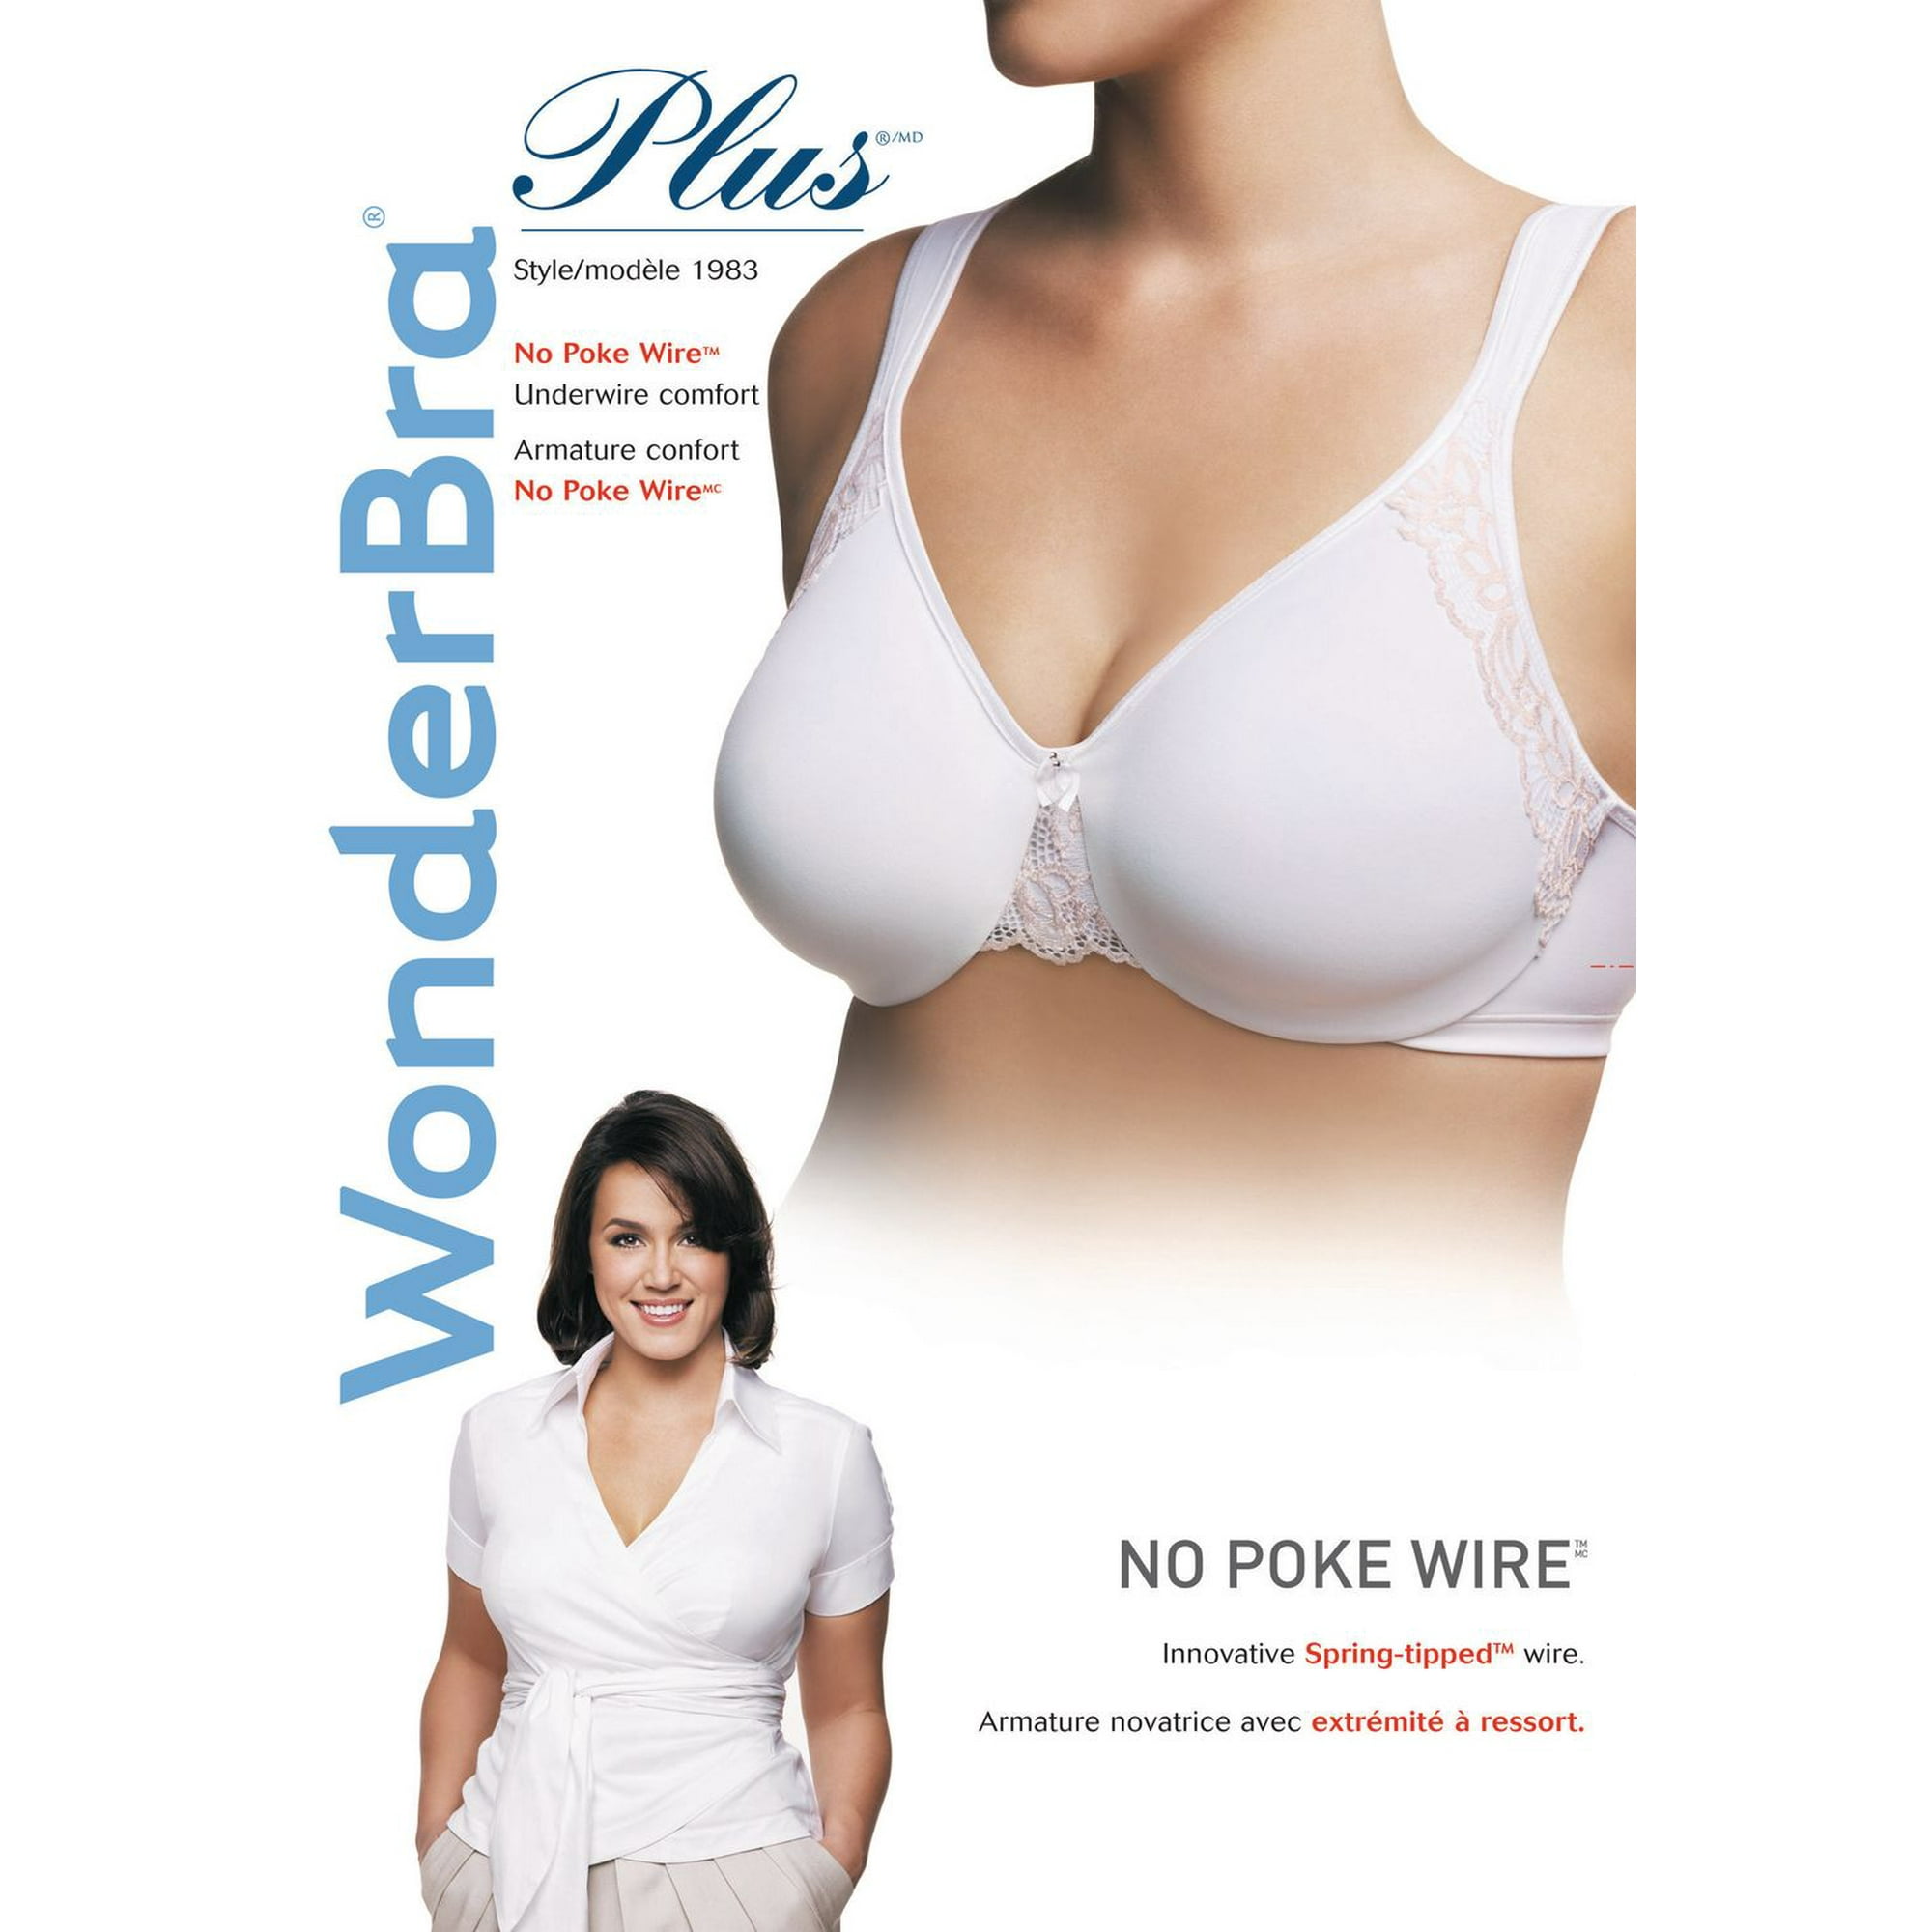 Wonderbra, Shop Wonderbra for underwear, lingerie sets and bras